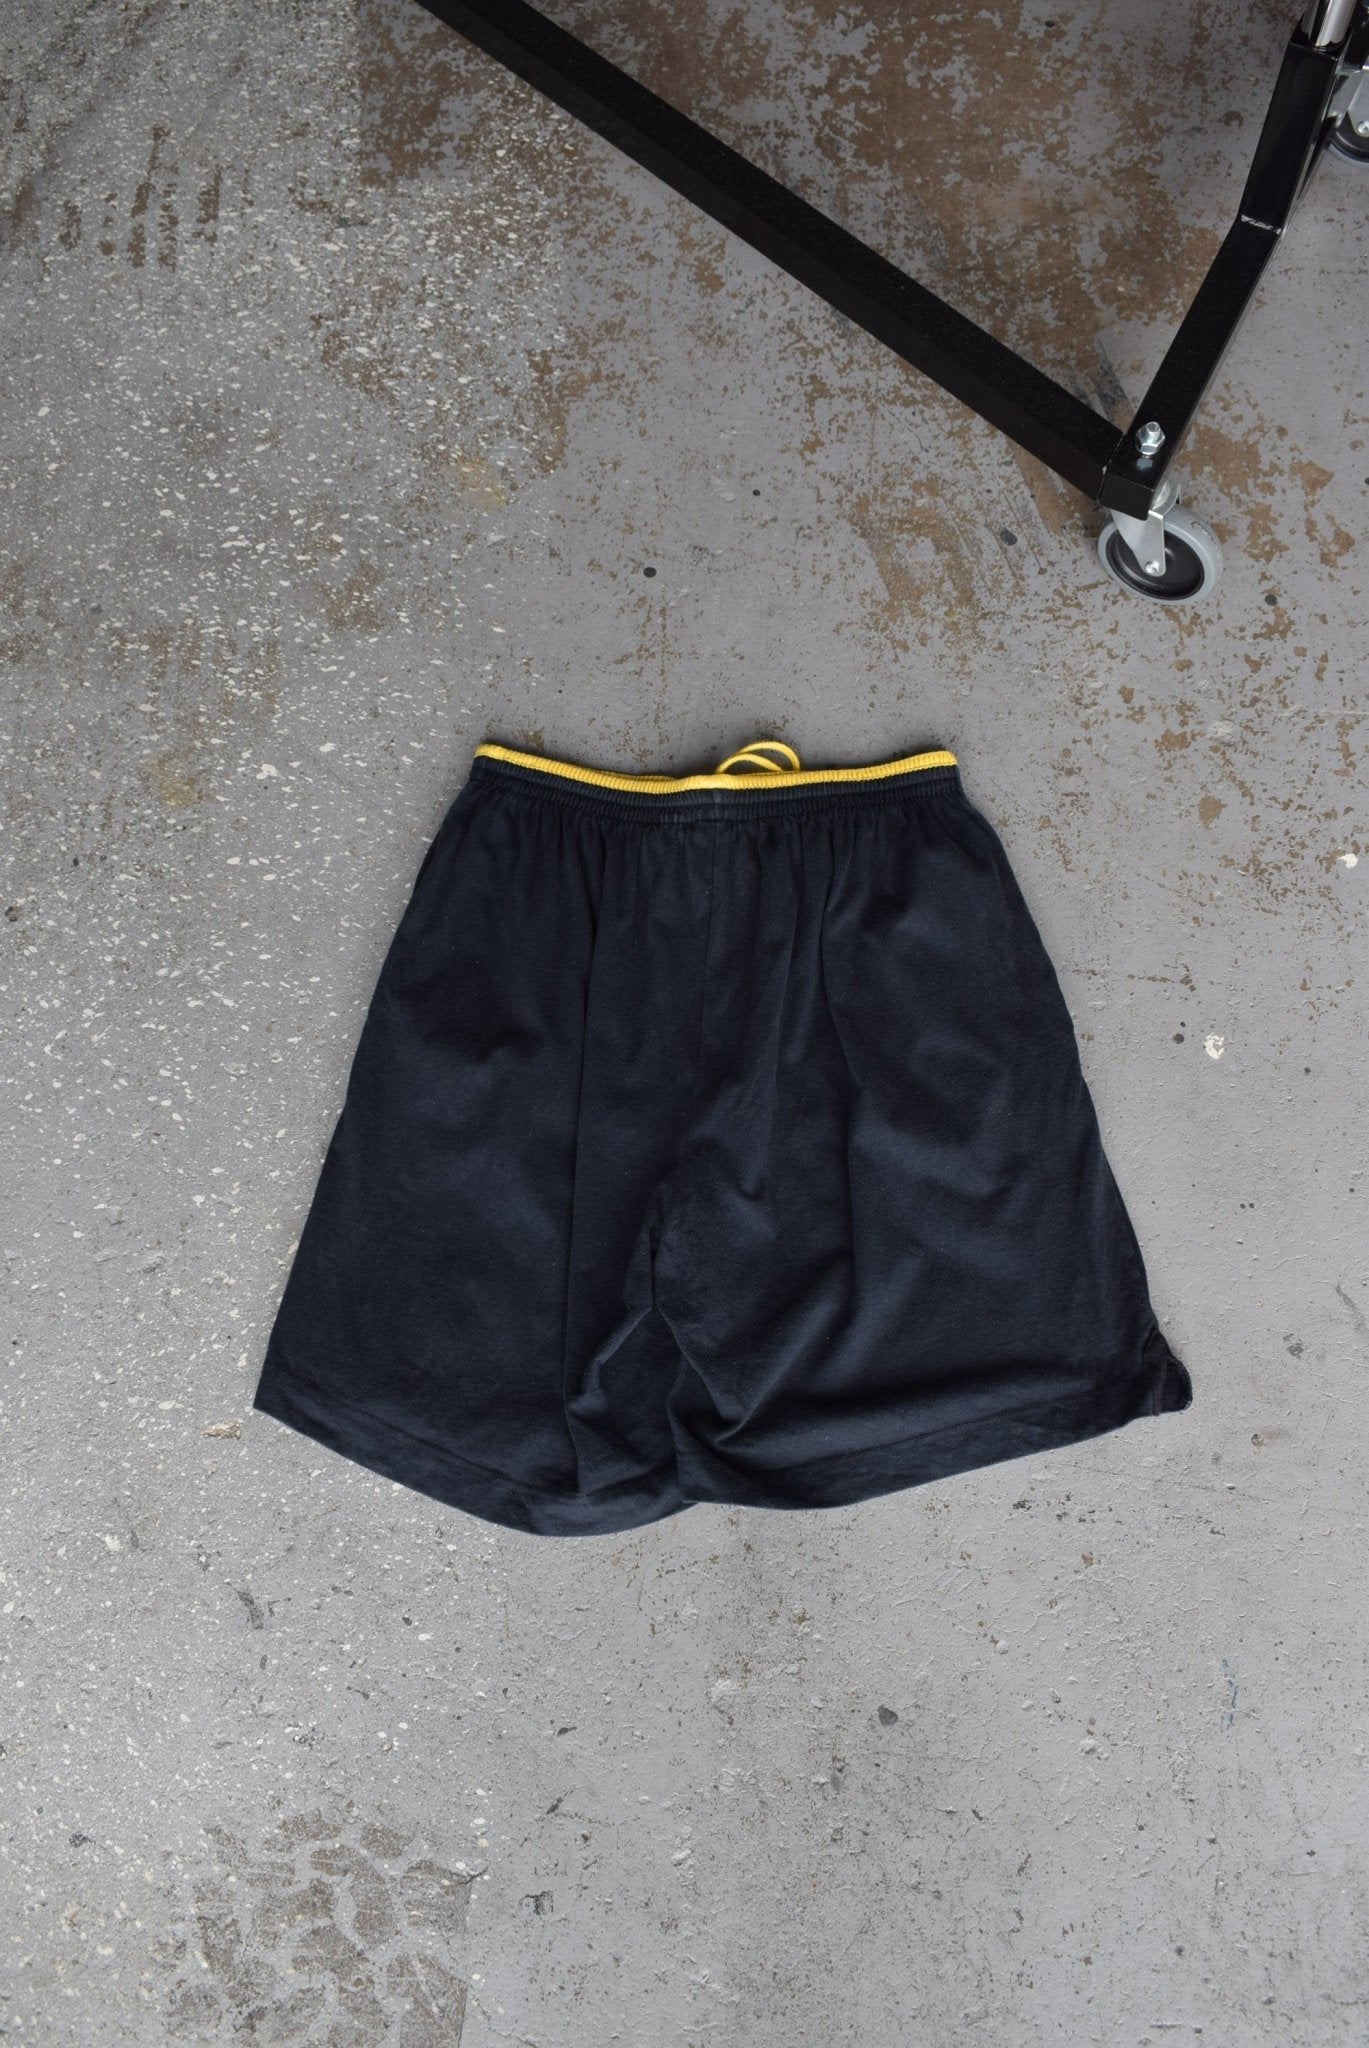 Vintage 90s Nike Shorts (XL) - Retrospective Store